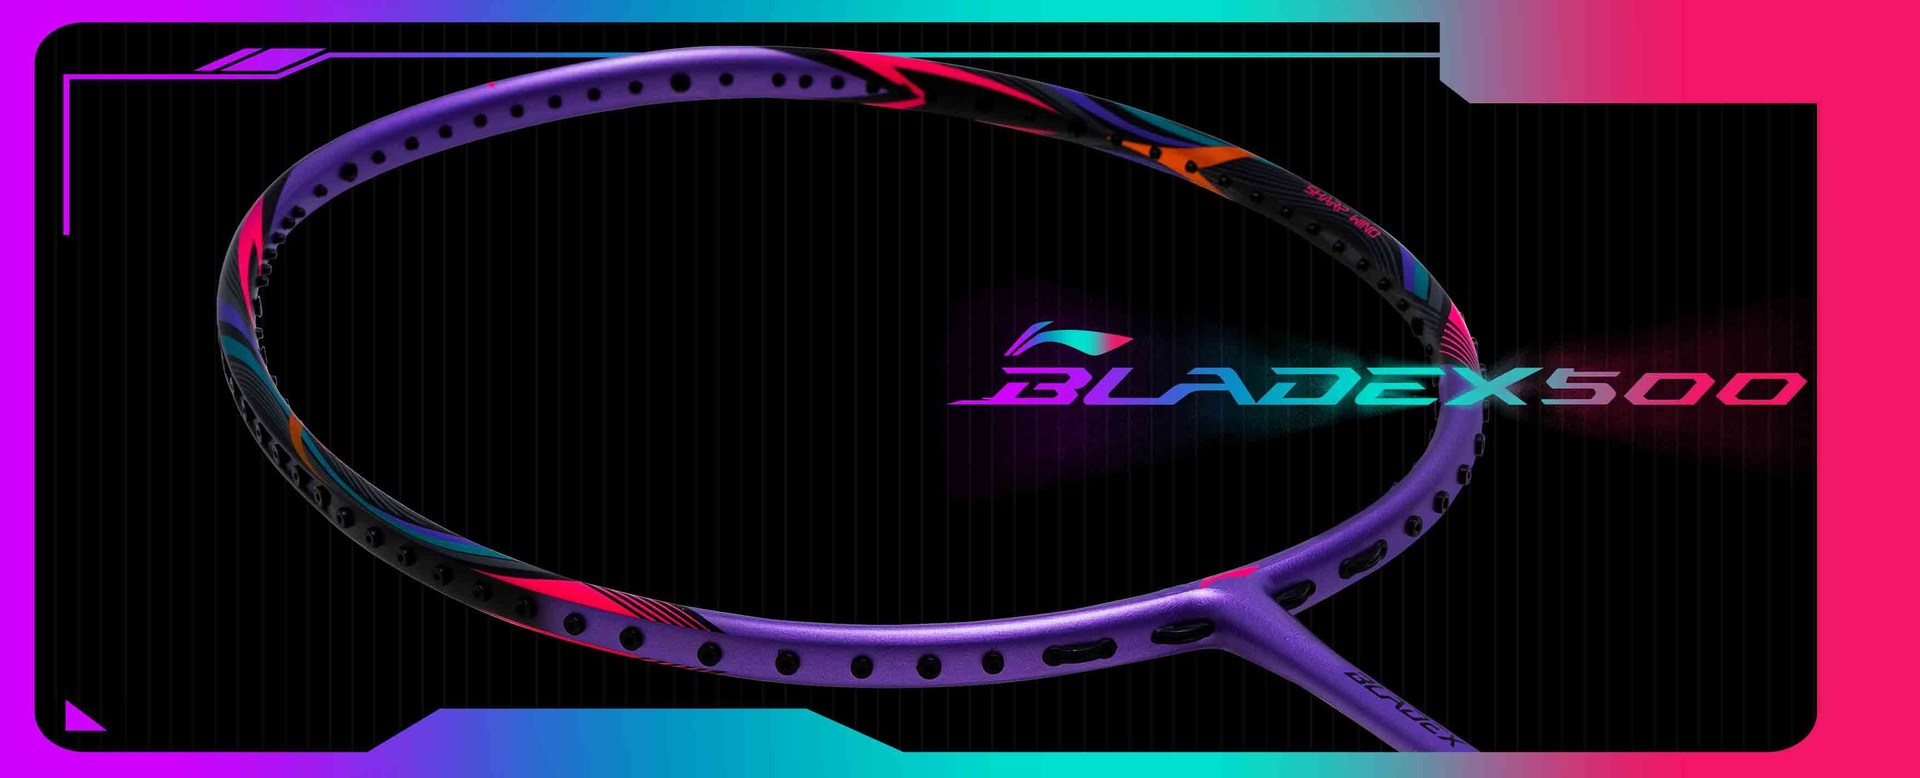 Blade X 500 Badminton racket by Li-Ning Studio